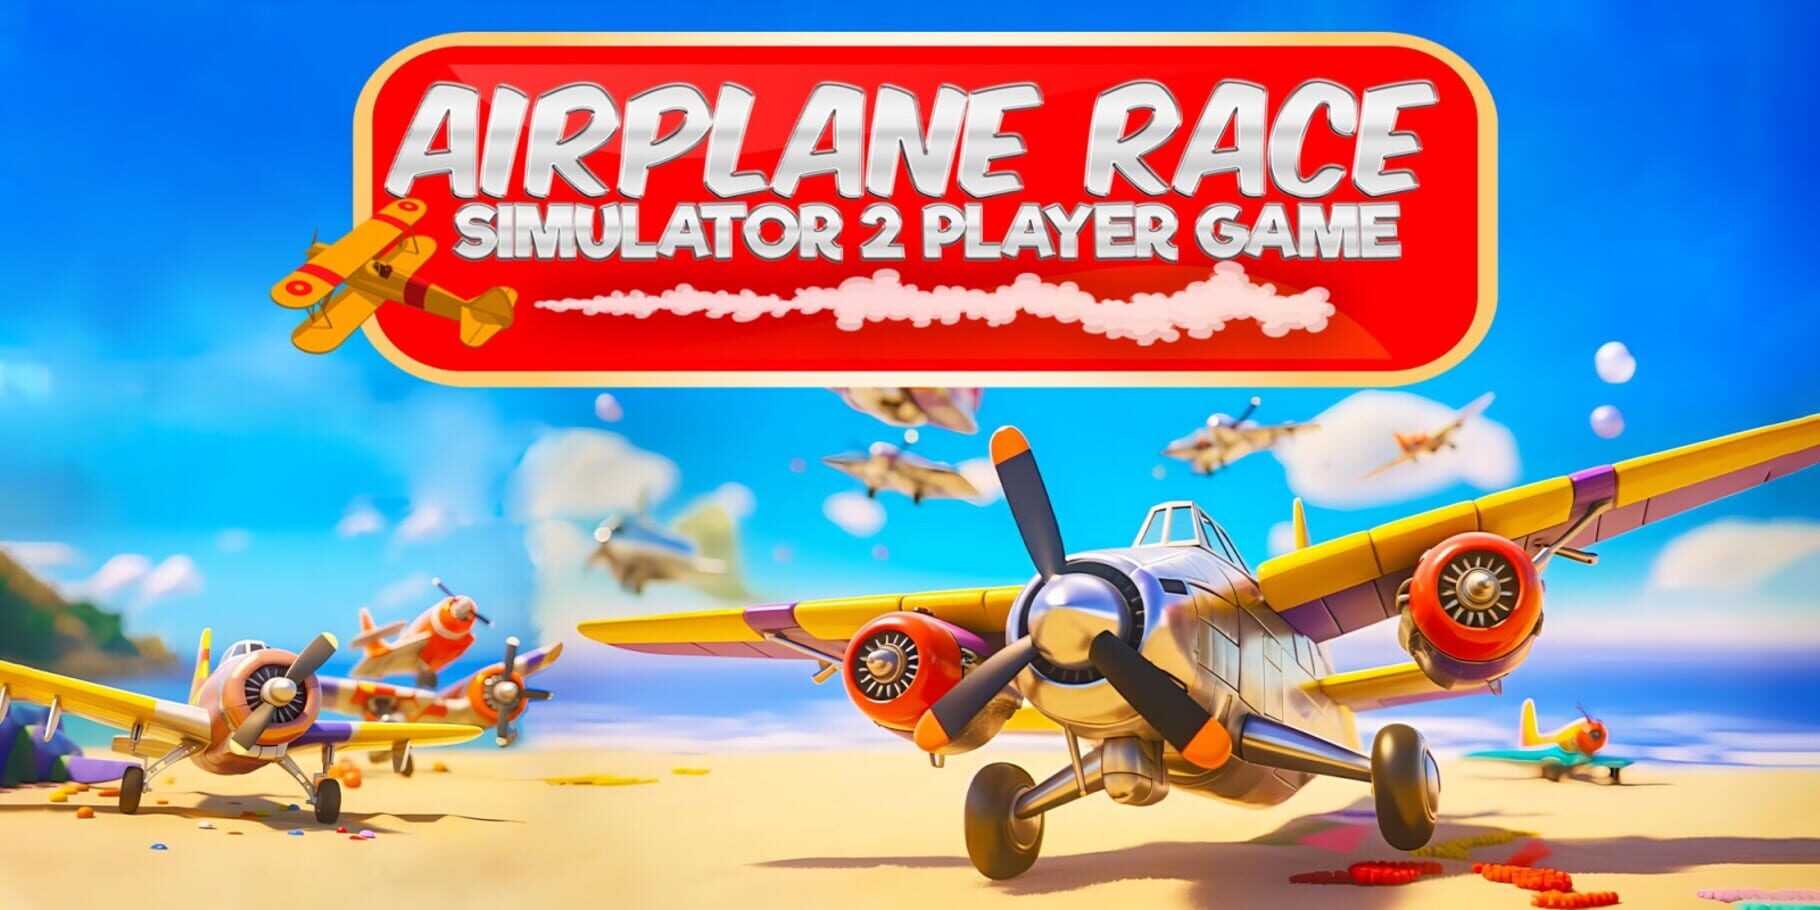 Airplane Race Simulator 2 Player Game artwork